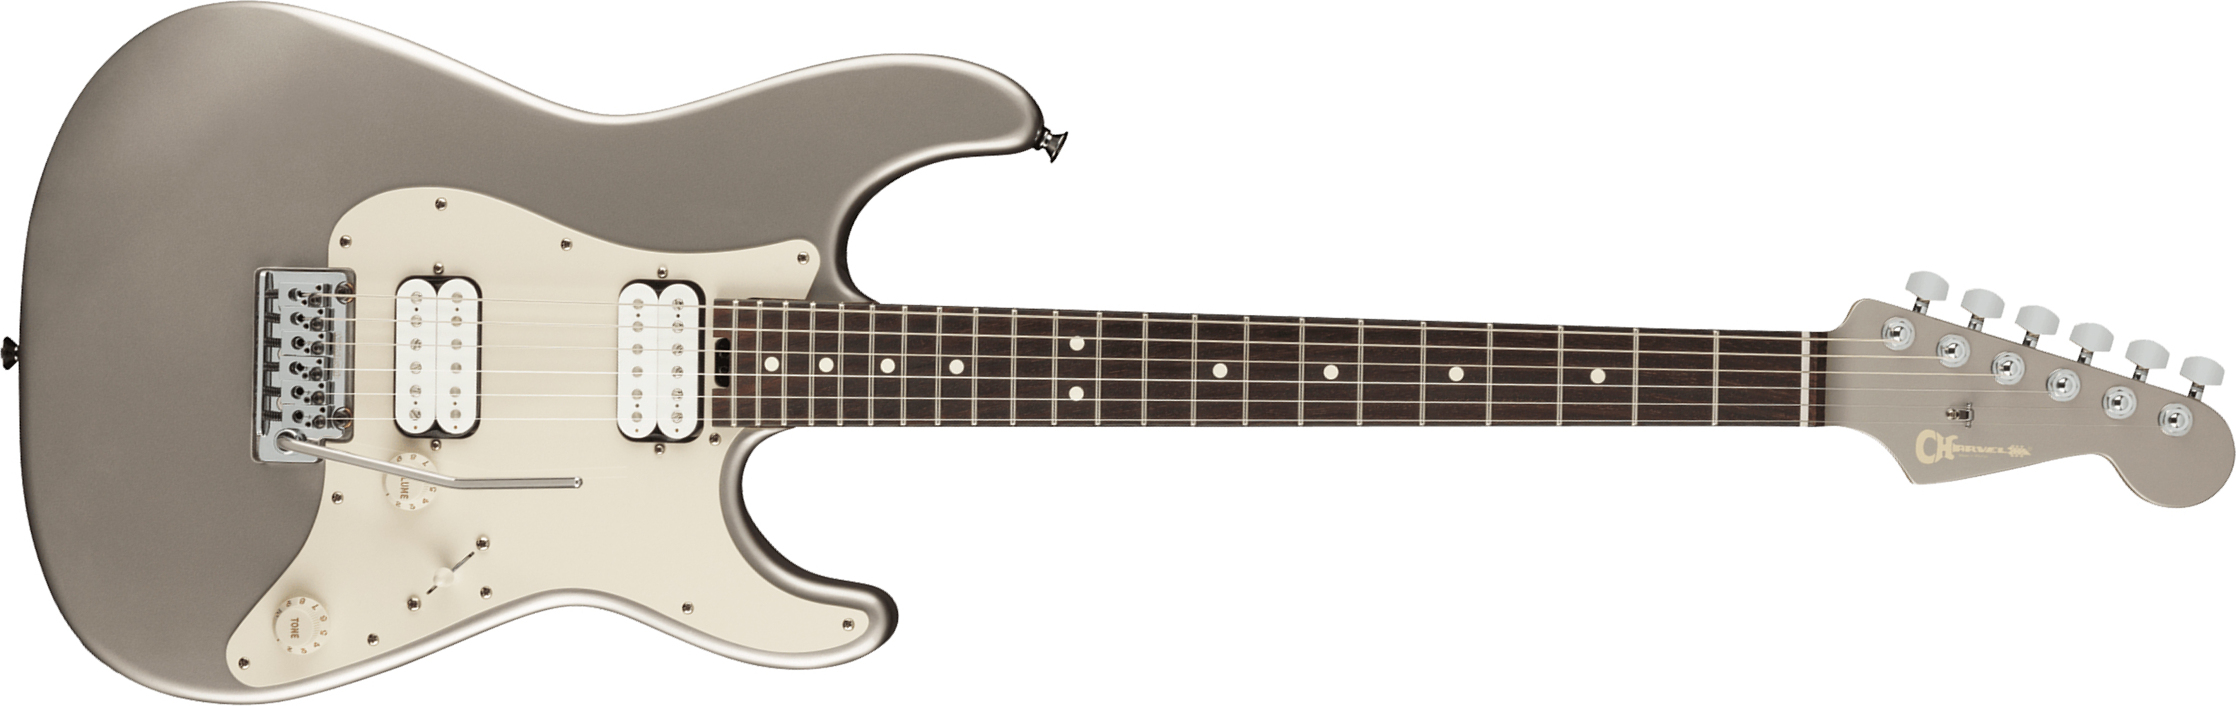 Charvel Prashant Aswani Pro-mod So-cal Pa28 Signature 2h Trem Mn - Inca Silver - Str shape electric guitar - Main picture